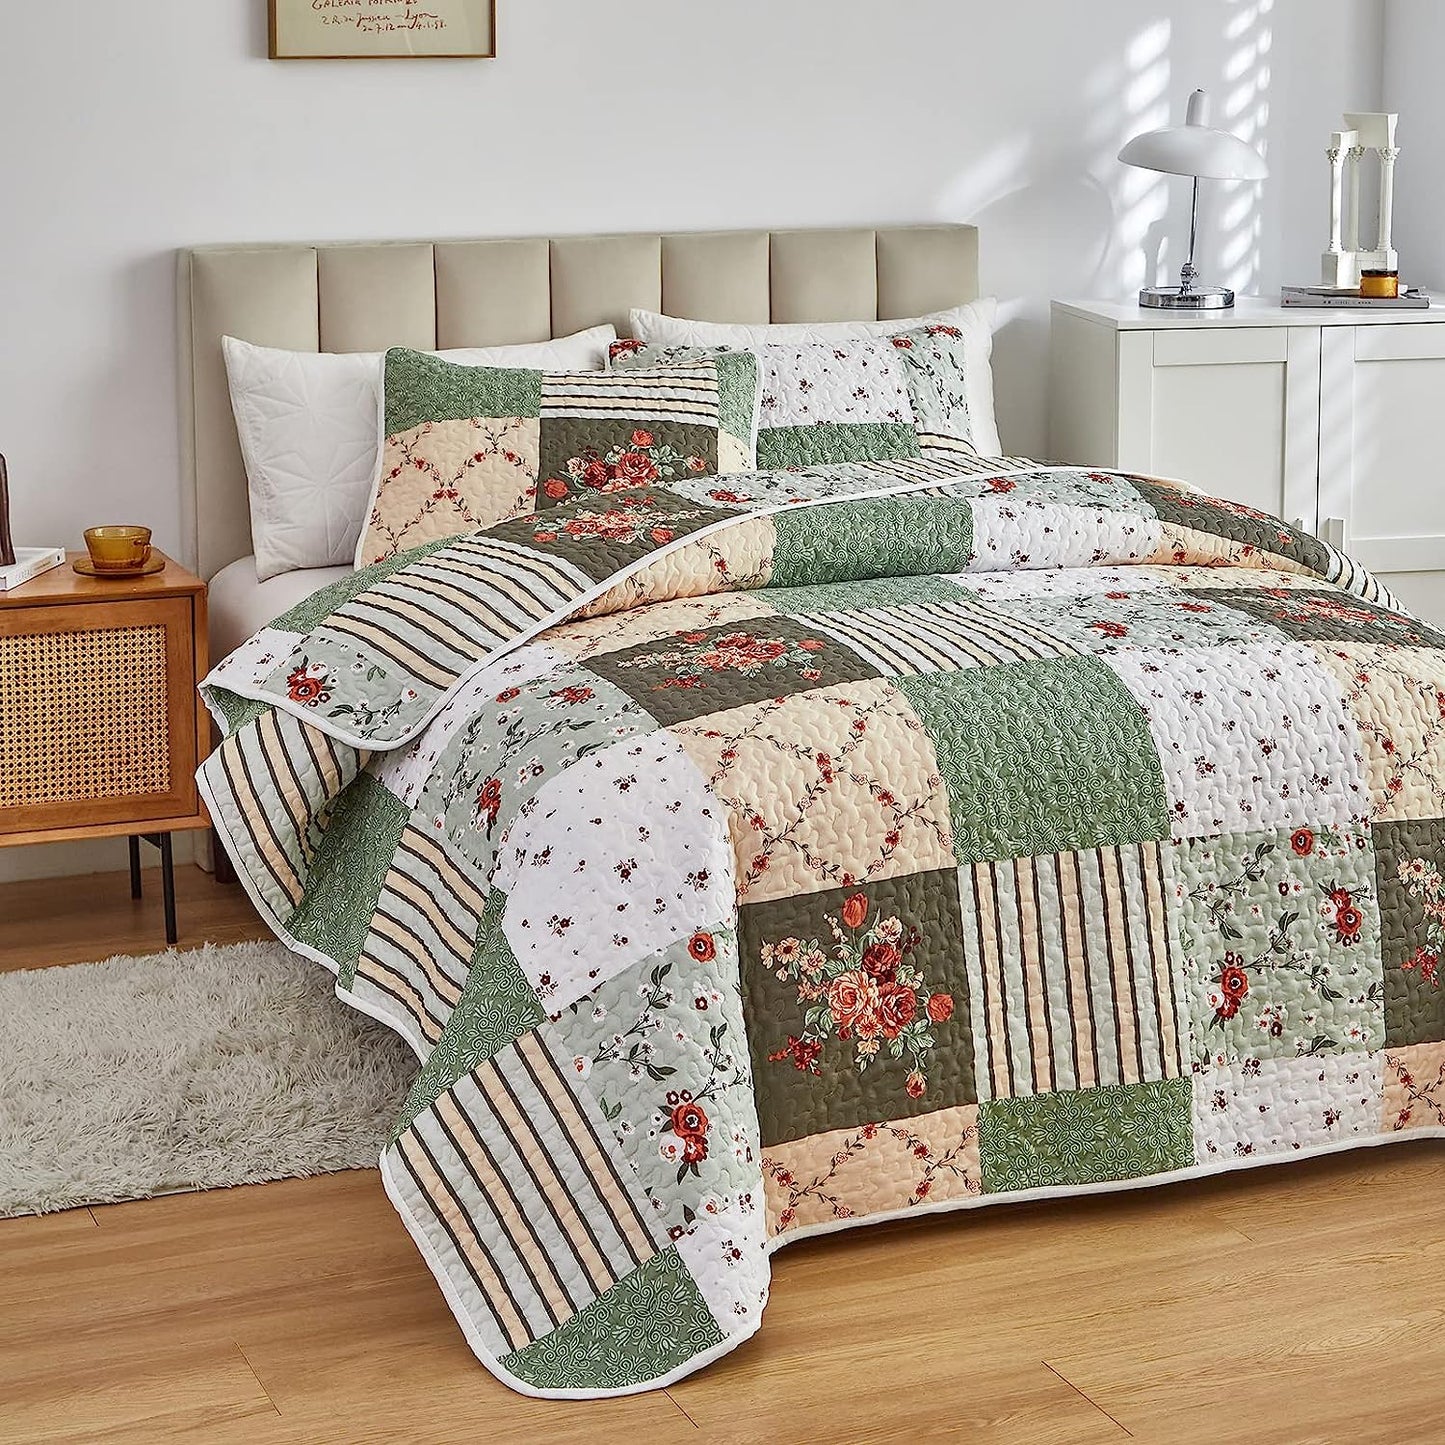 Green & Beige Floral Patchwork 3 Piece Bedding Quilt Set